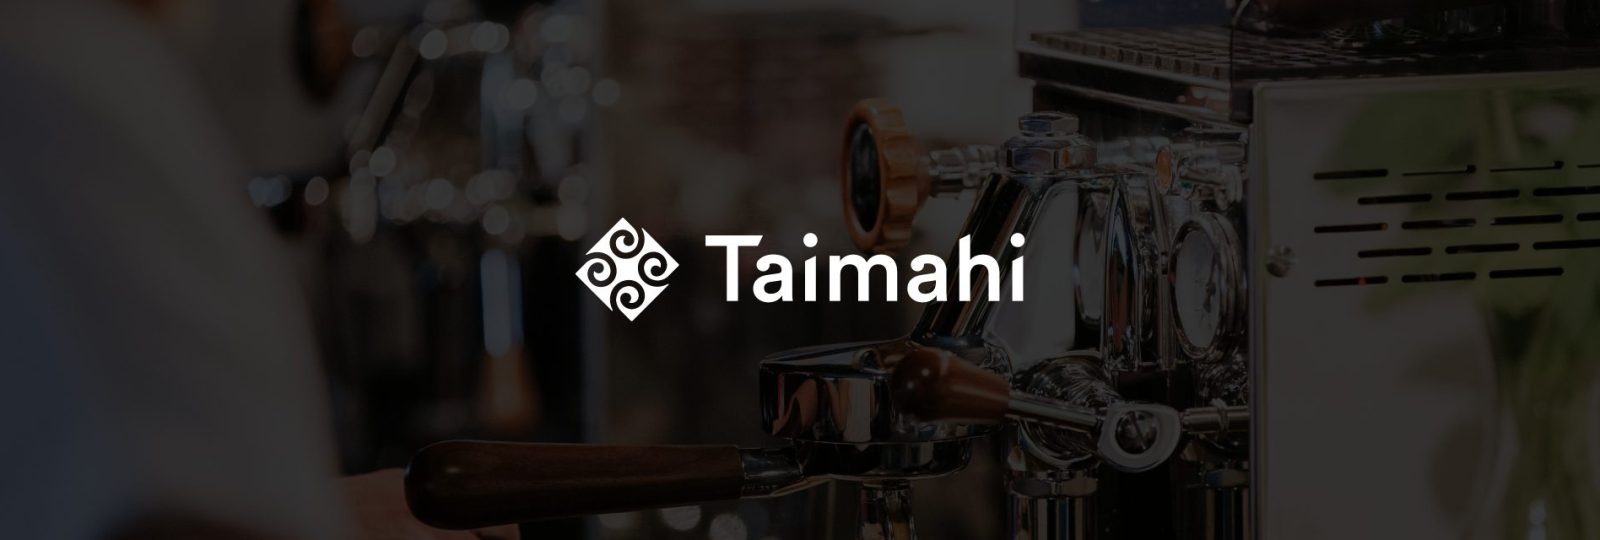 Taimahi Trust - Banner Image